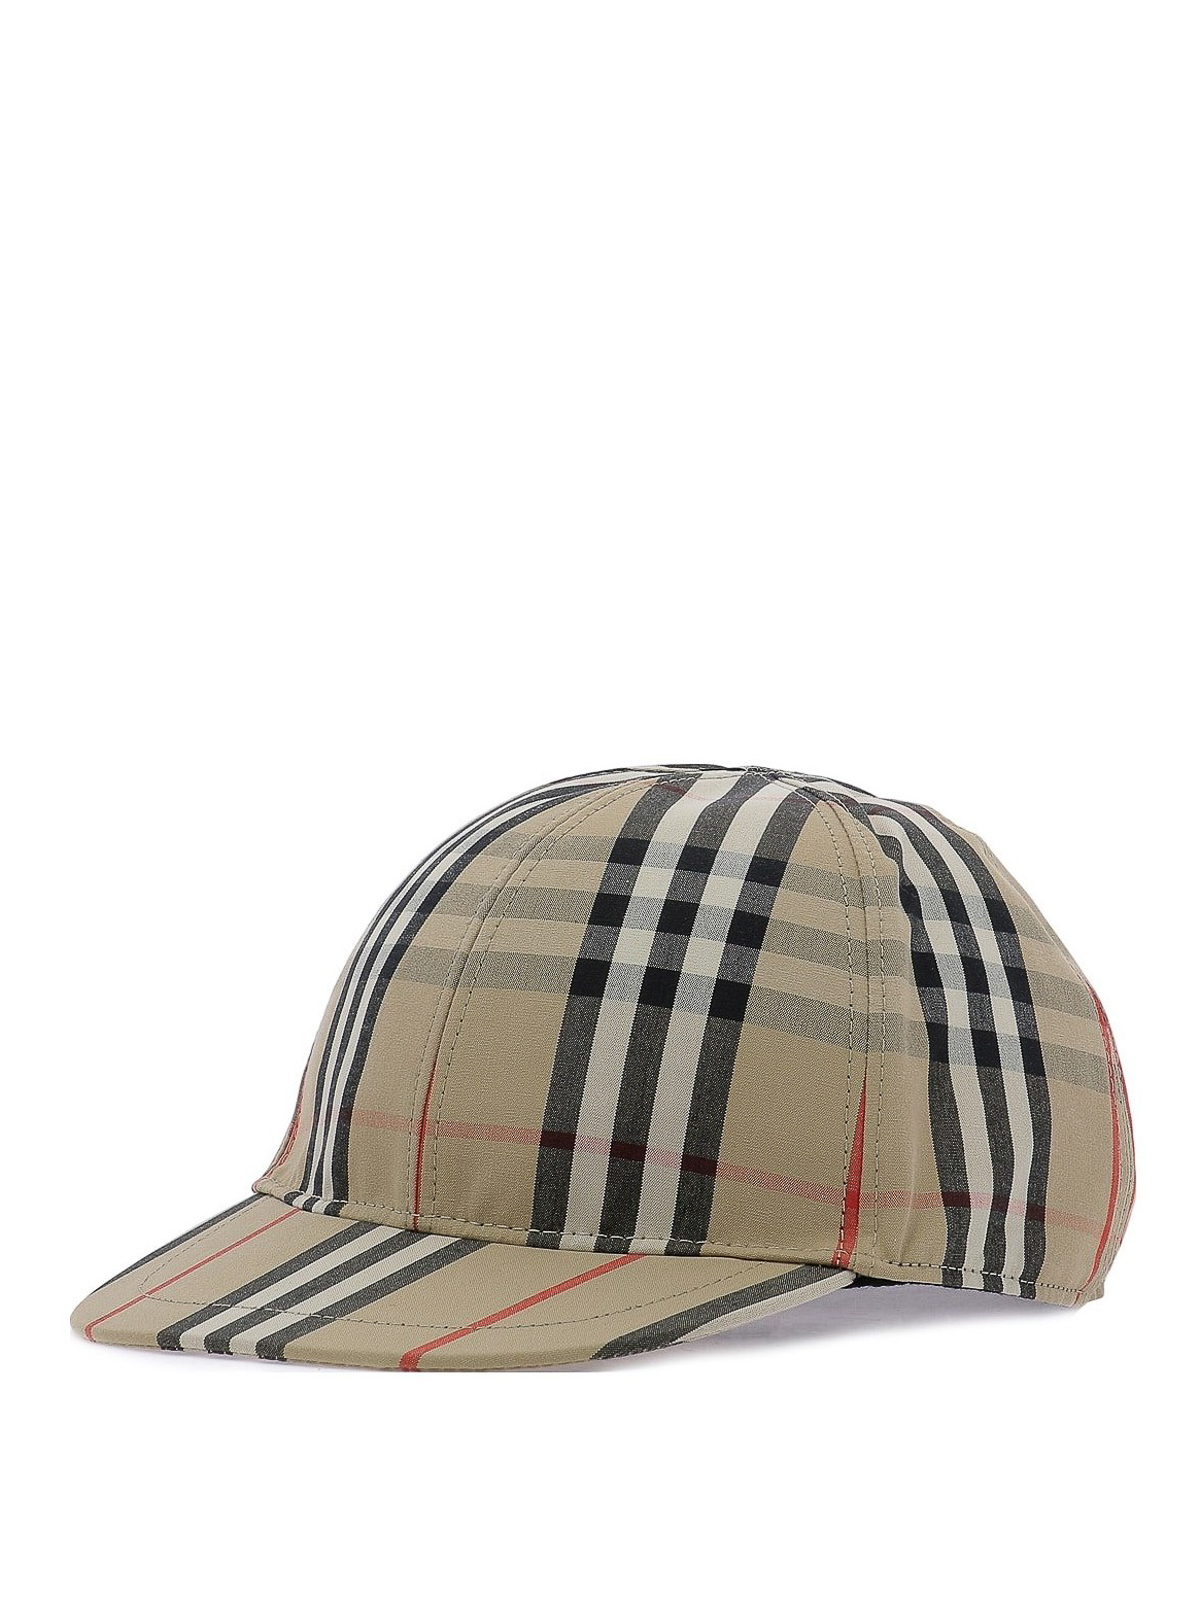 Hats and caps Burberry - Vintage check baseball cap